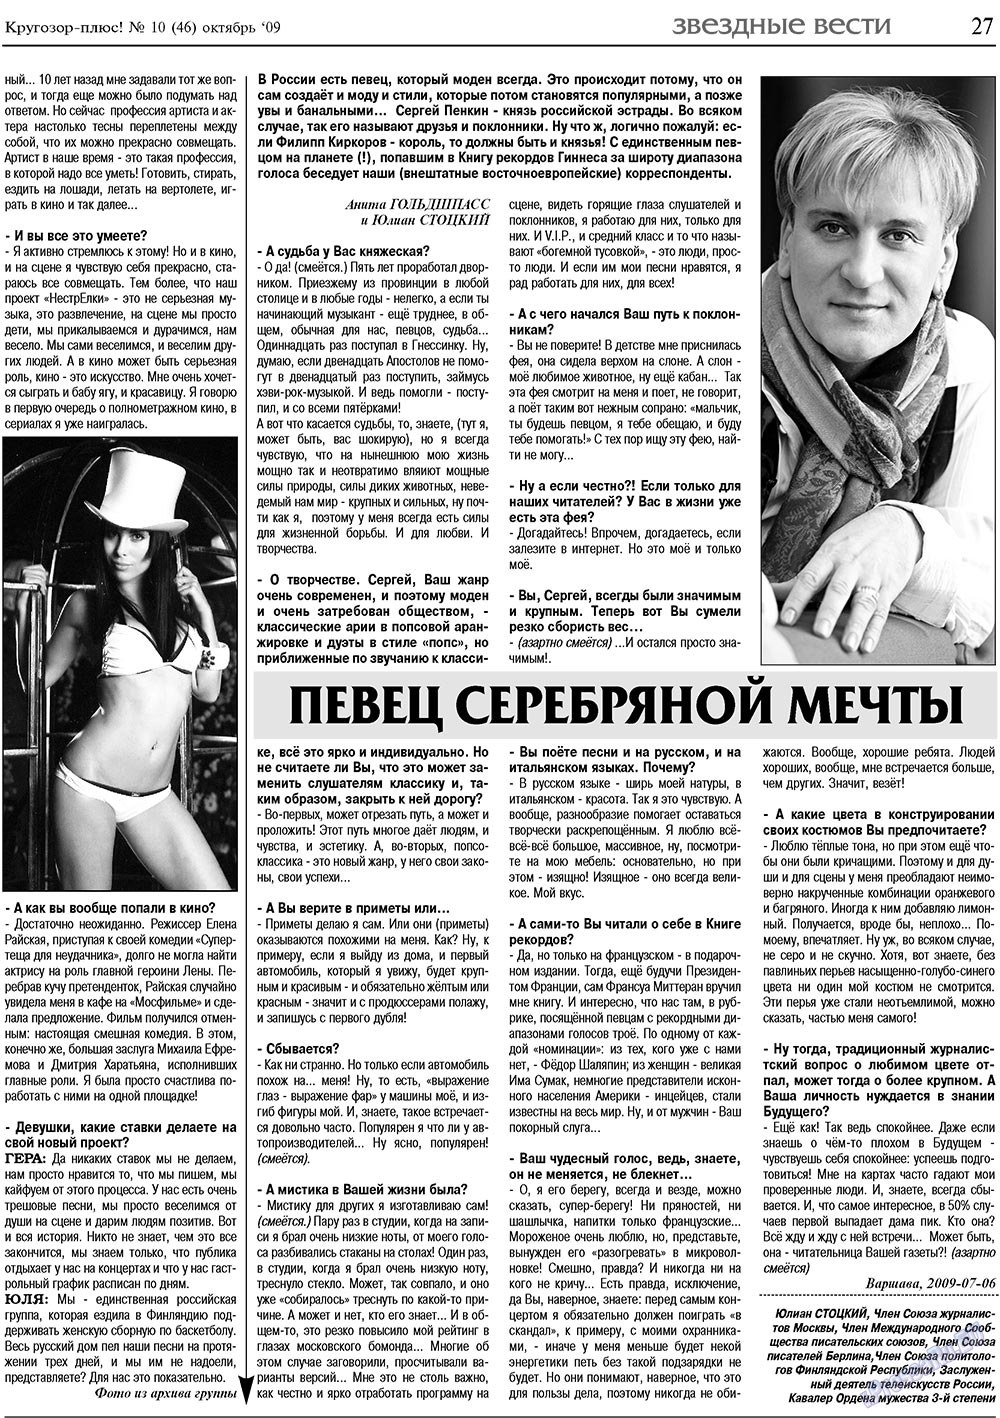 Кругозор плюс! (газета). 2009 год, номер 10, стр. 27